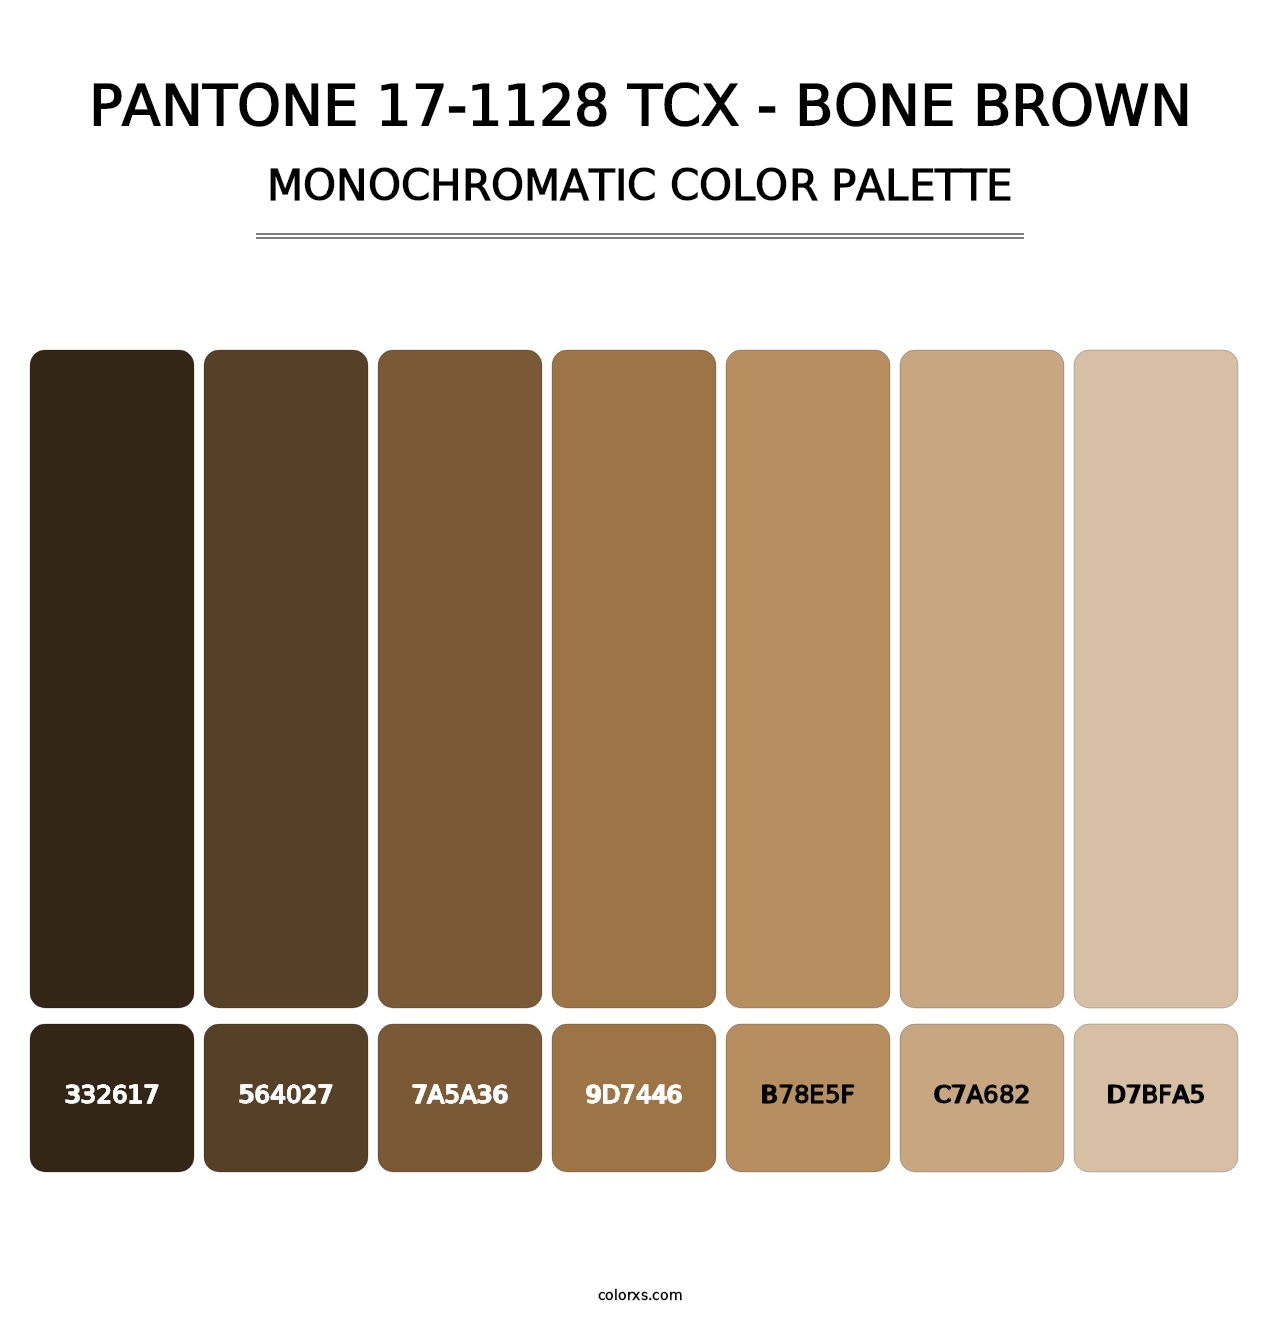 PANTONE 17-1128 TCX - Bone Brown - Monochromatic Color Palette